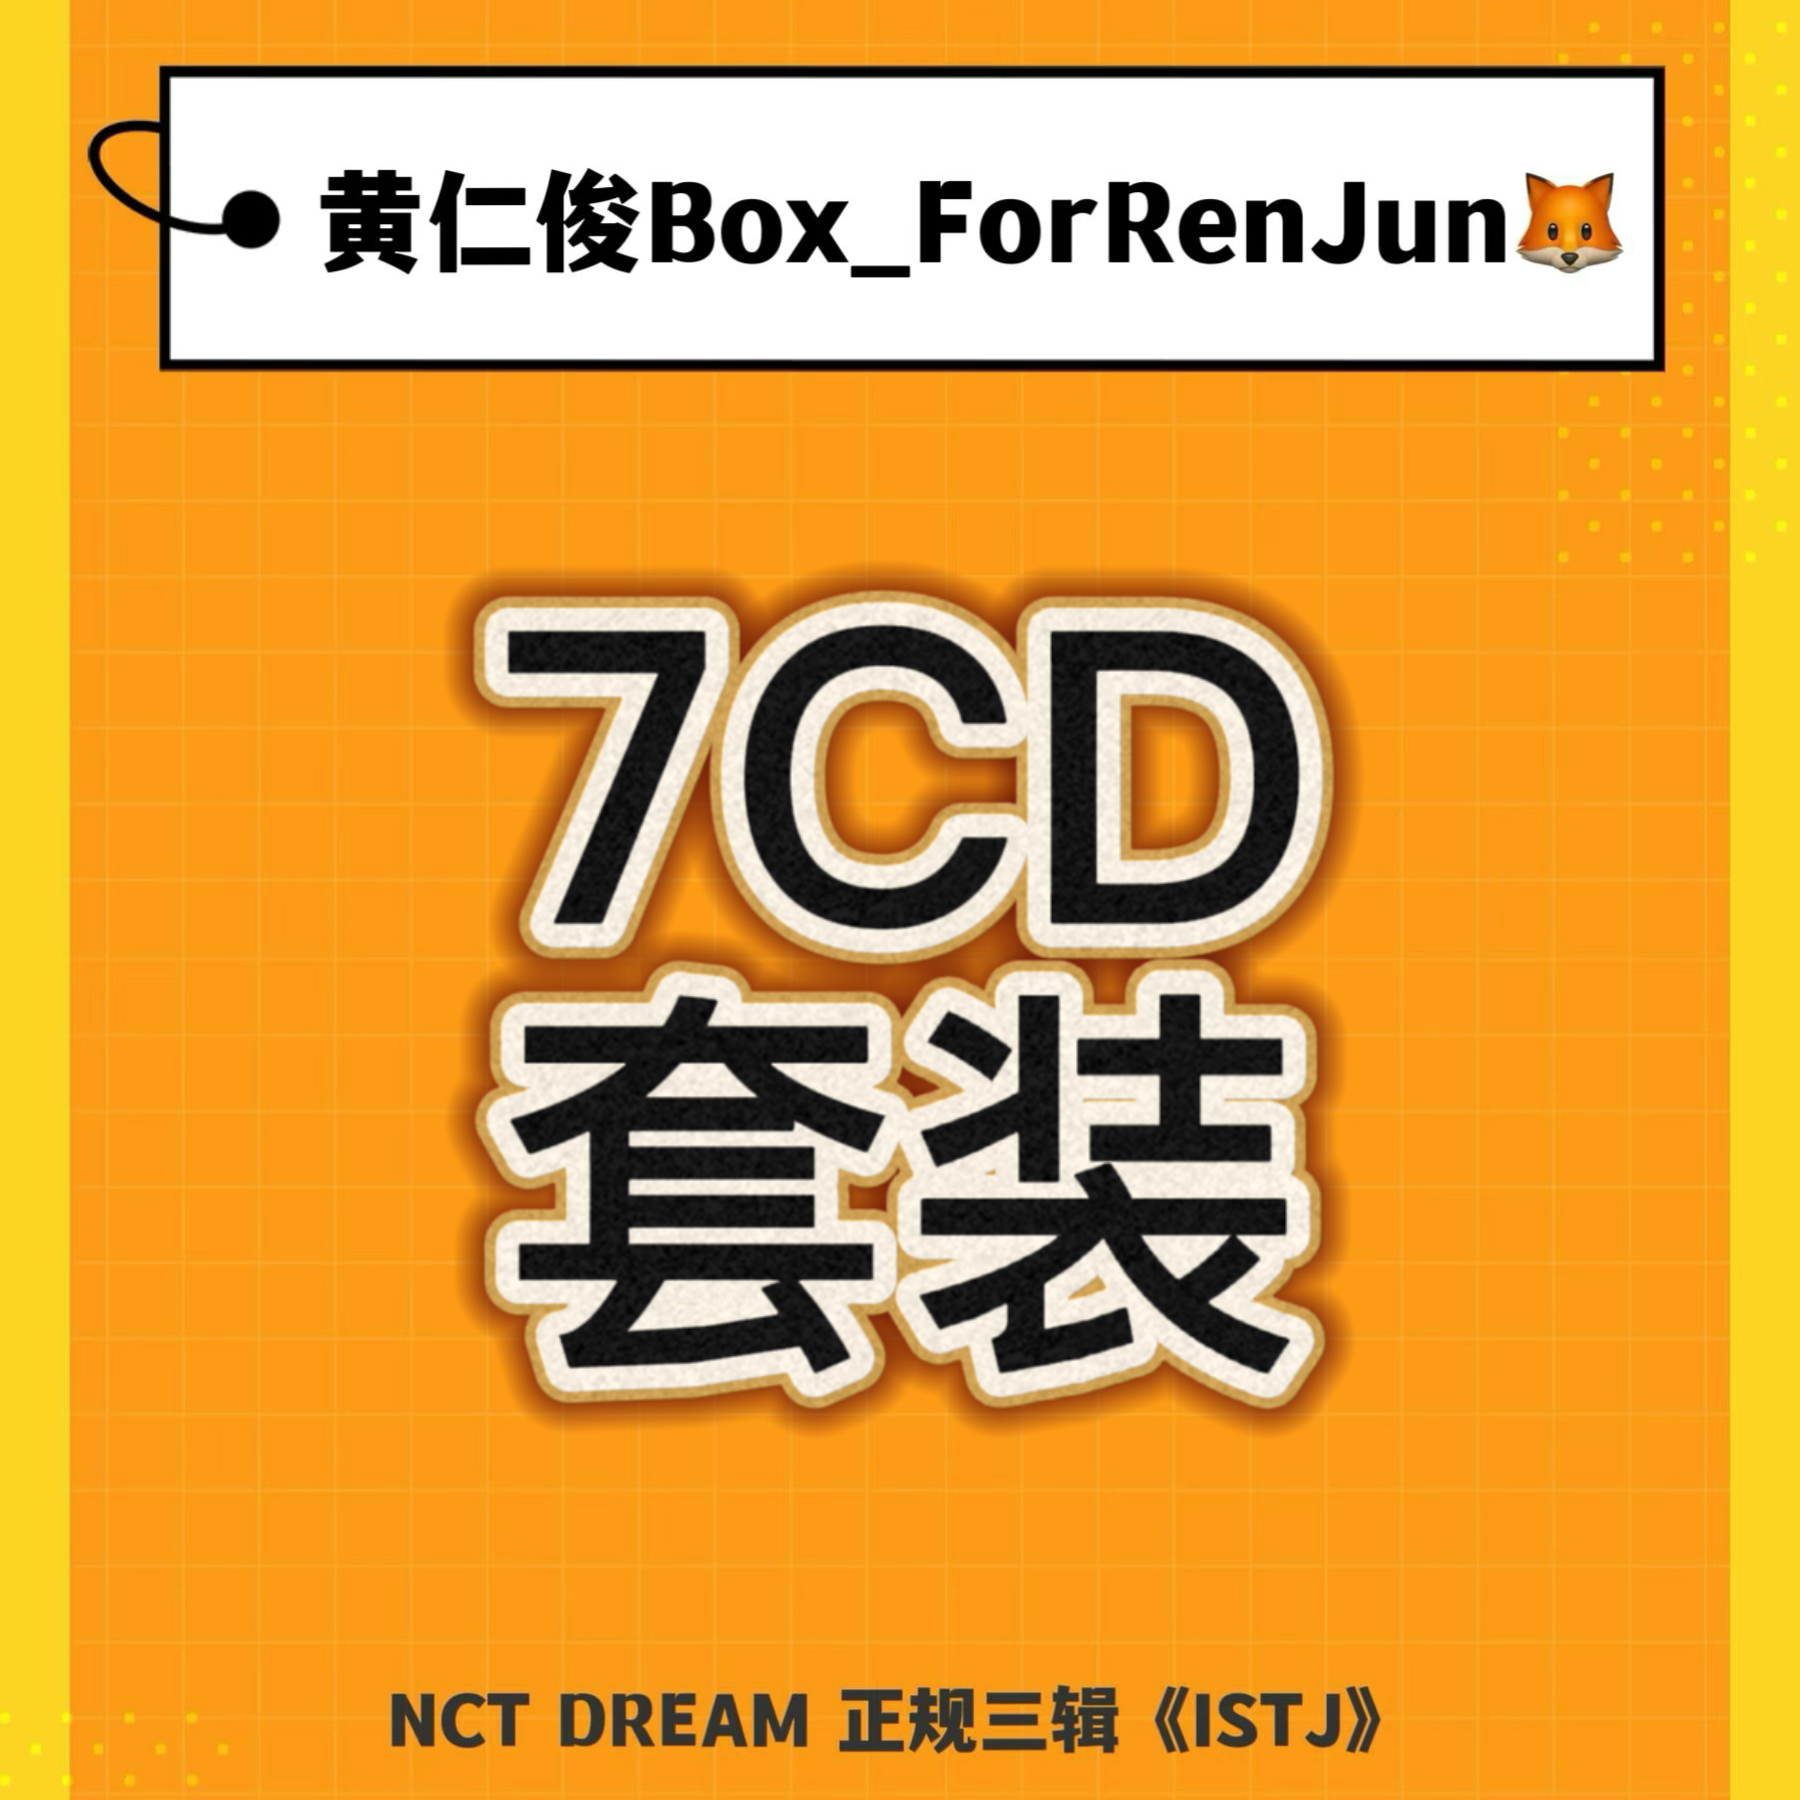 [全款 裸专] [7CD 套装] NCT DREAM - 正规3辑 [ISTJ] (7DREAM QR Ver.) (Smart Album)_黄仁俊吧RenJunBar